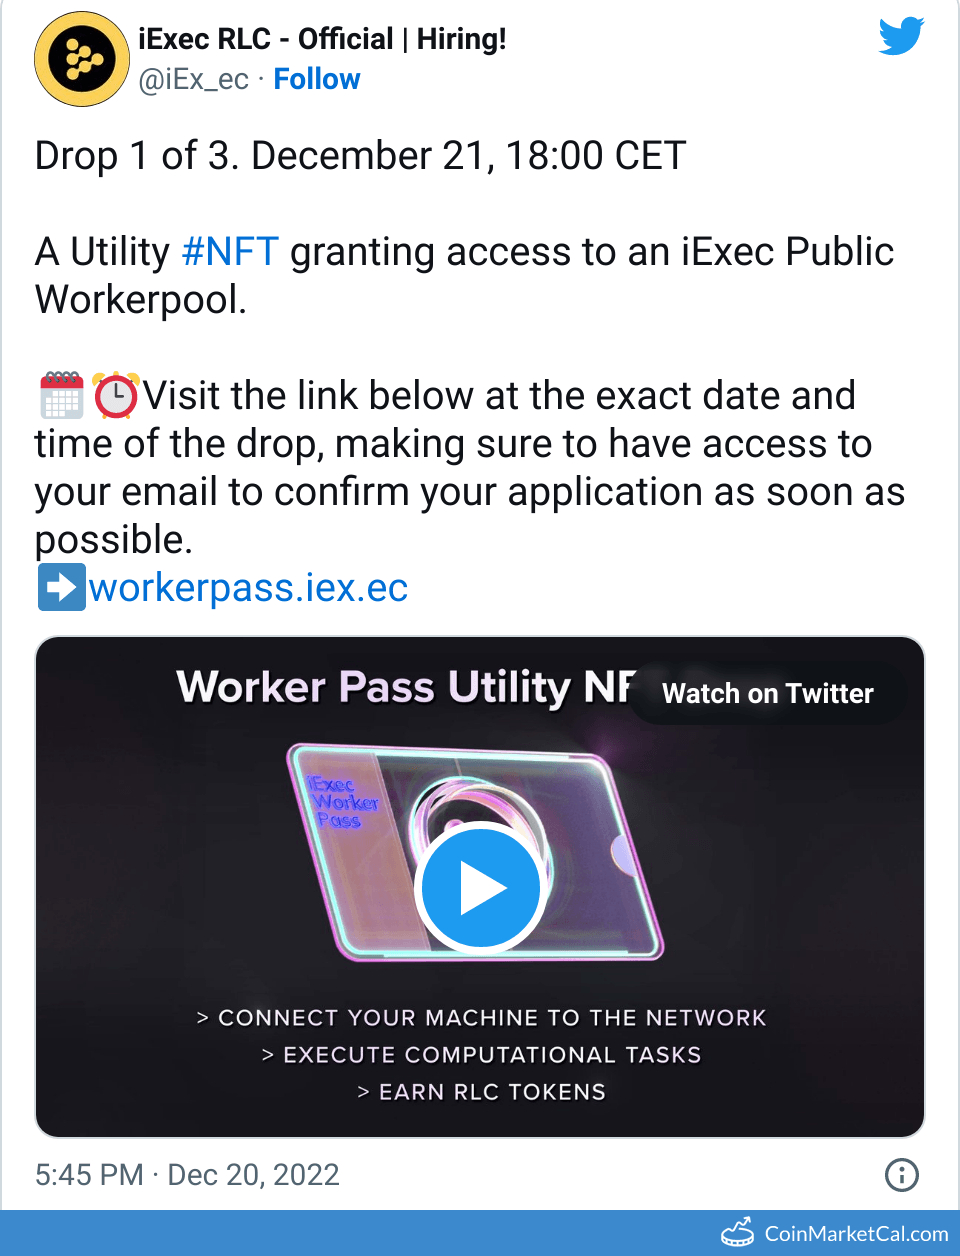 Workerpool Utility NFT image